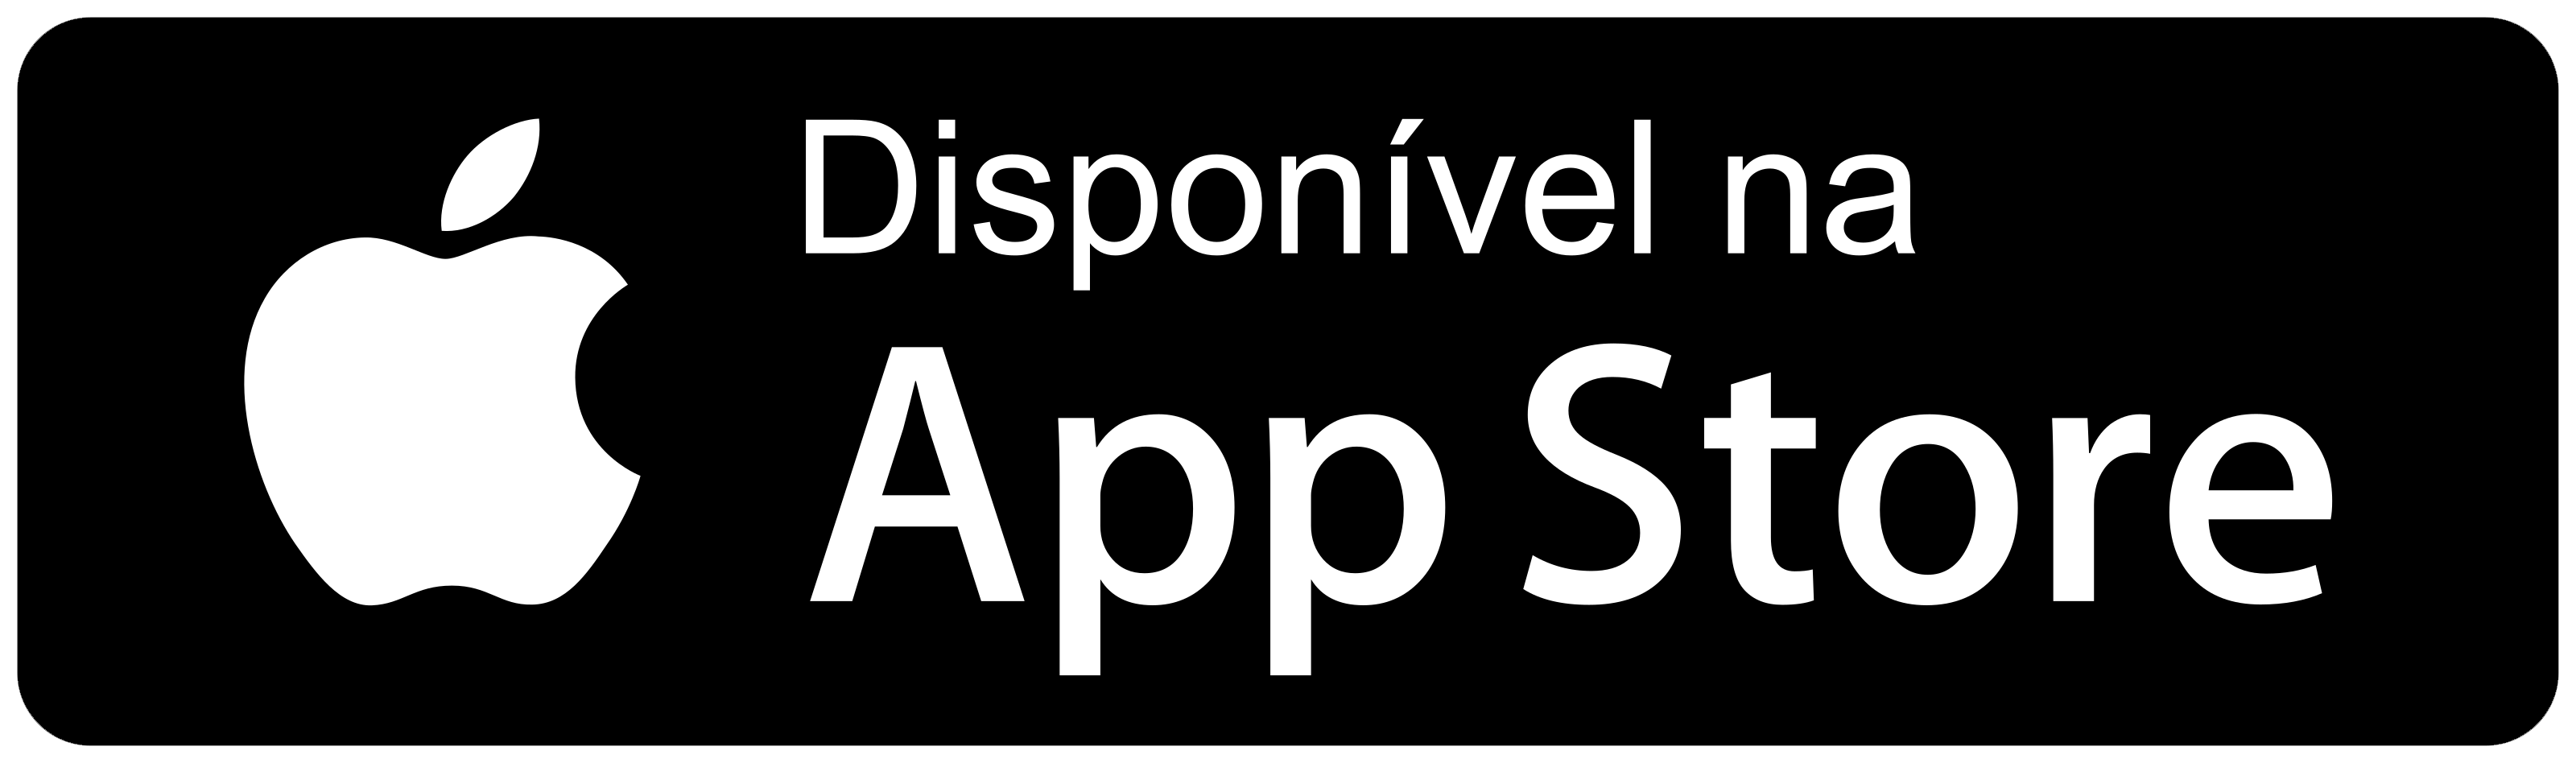 Logo para "Disponivel na app store botao" 